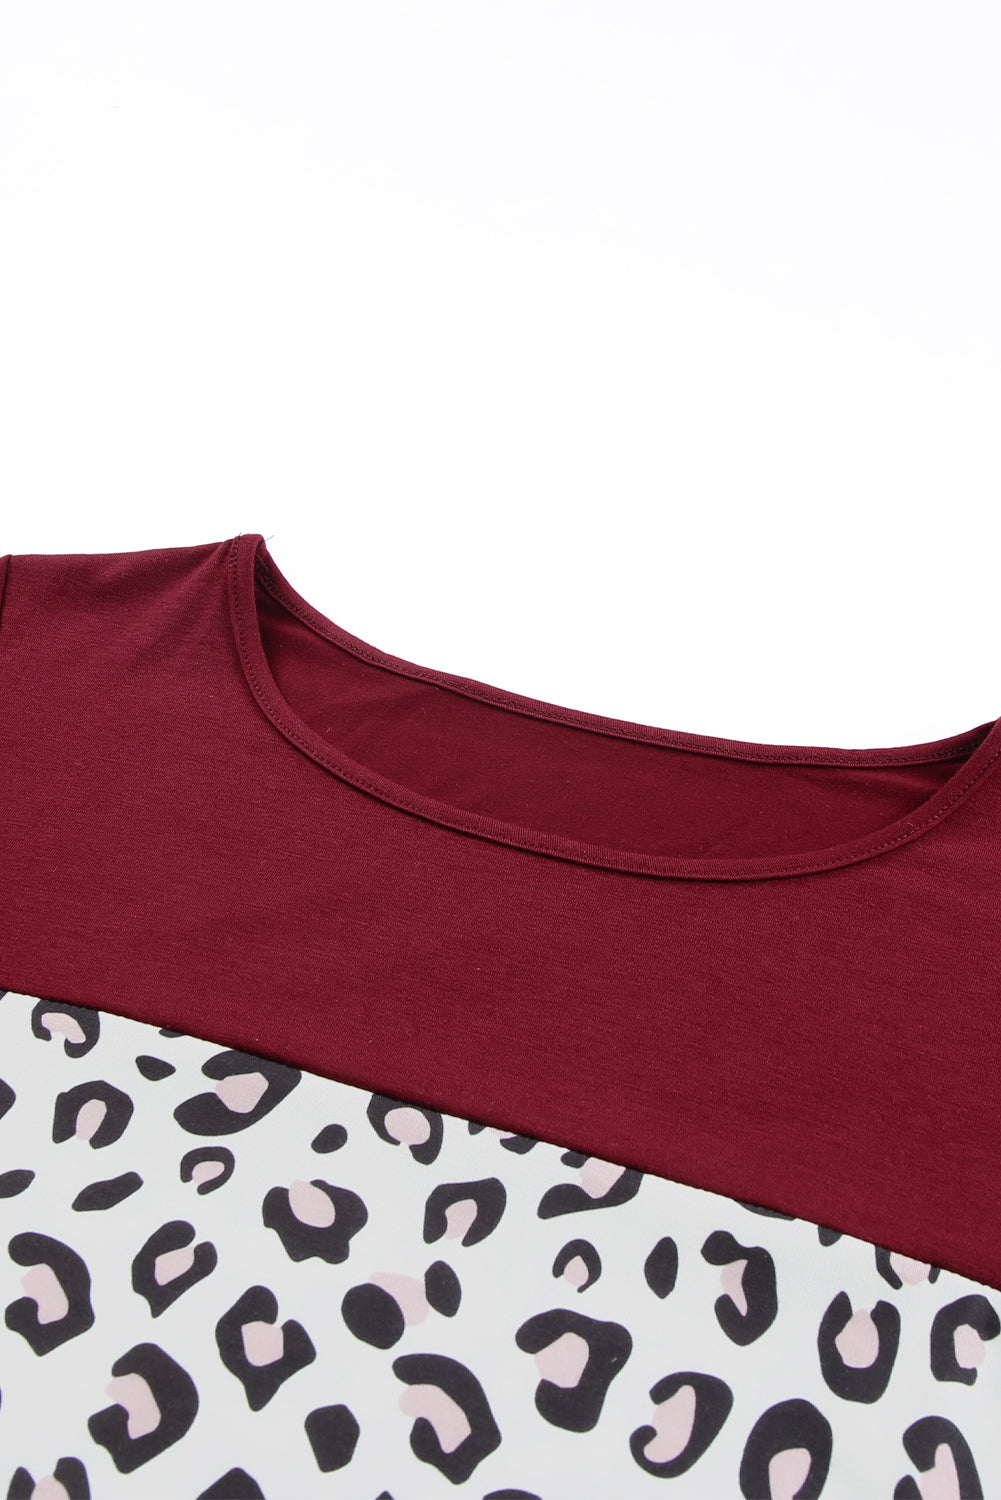 Wine Red Striped Leopard Patchwork Lace T Shirt Dress T Shirt Dresses JT's Designer Fashion